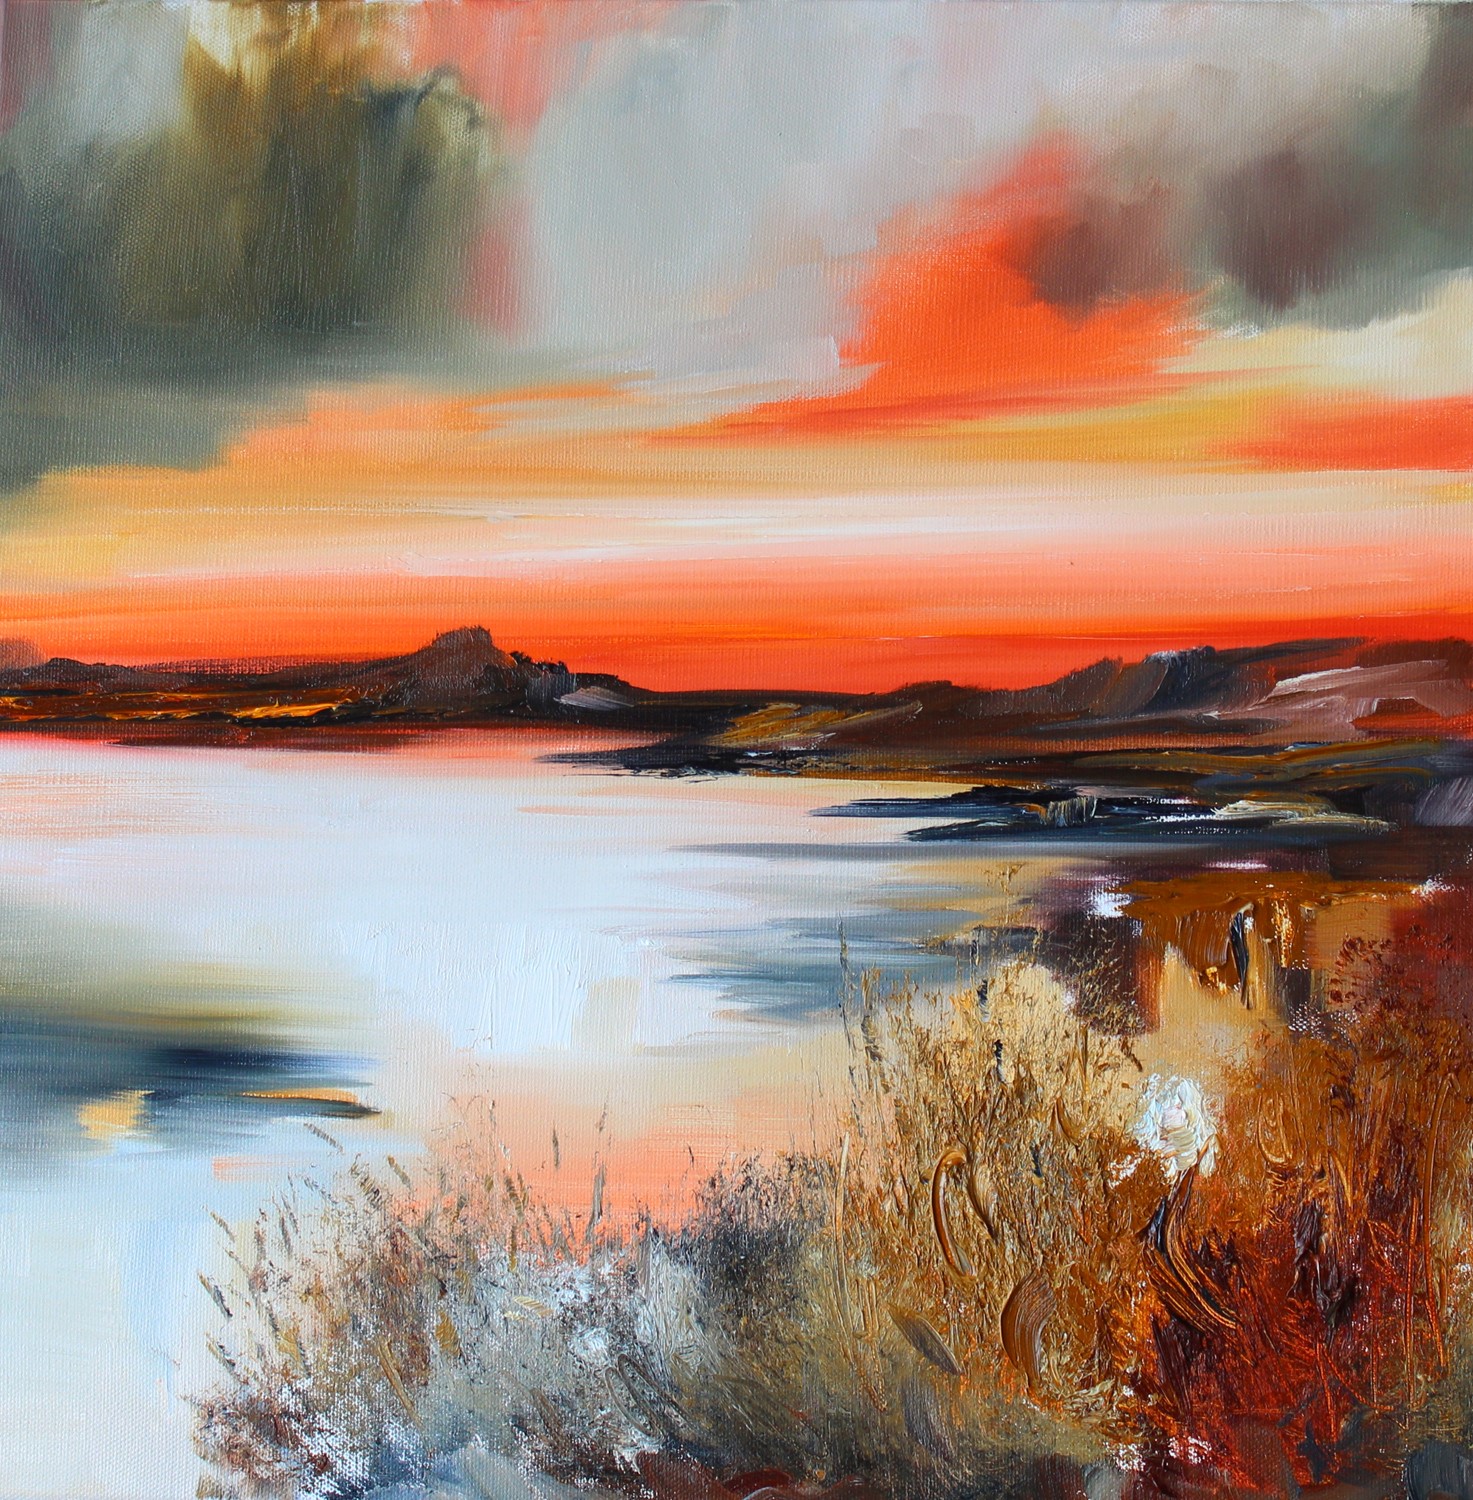 'A Dramatic Sunset' by artist Rosanne Barr